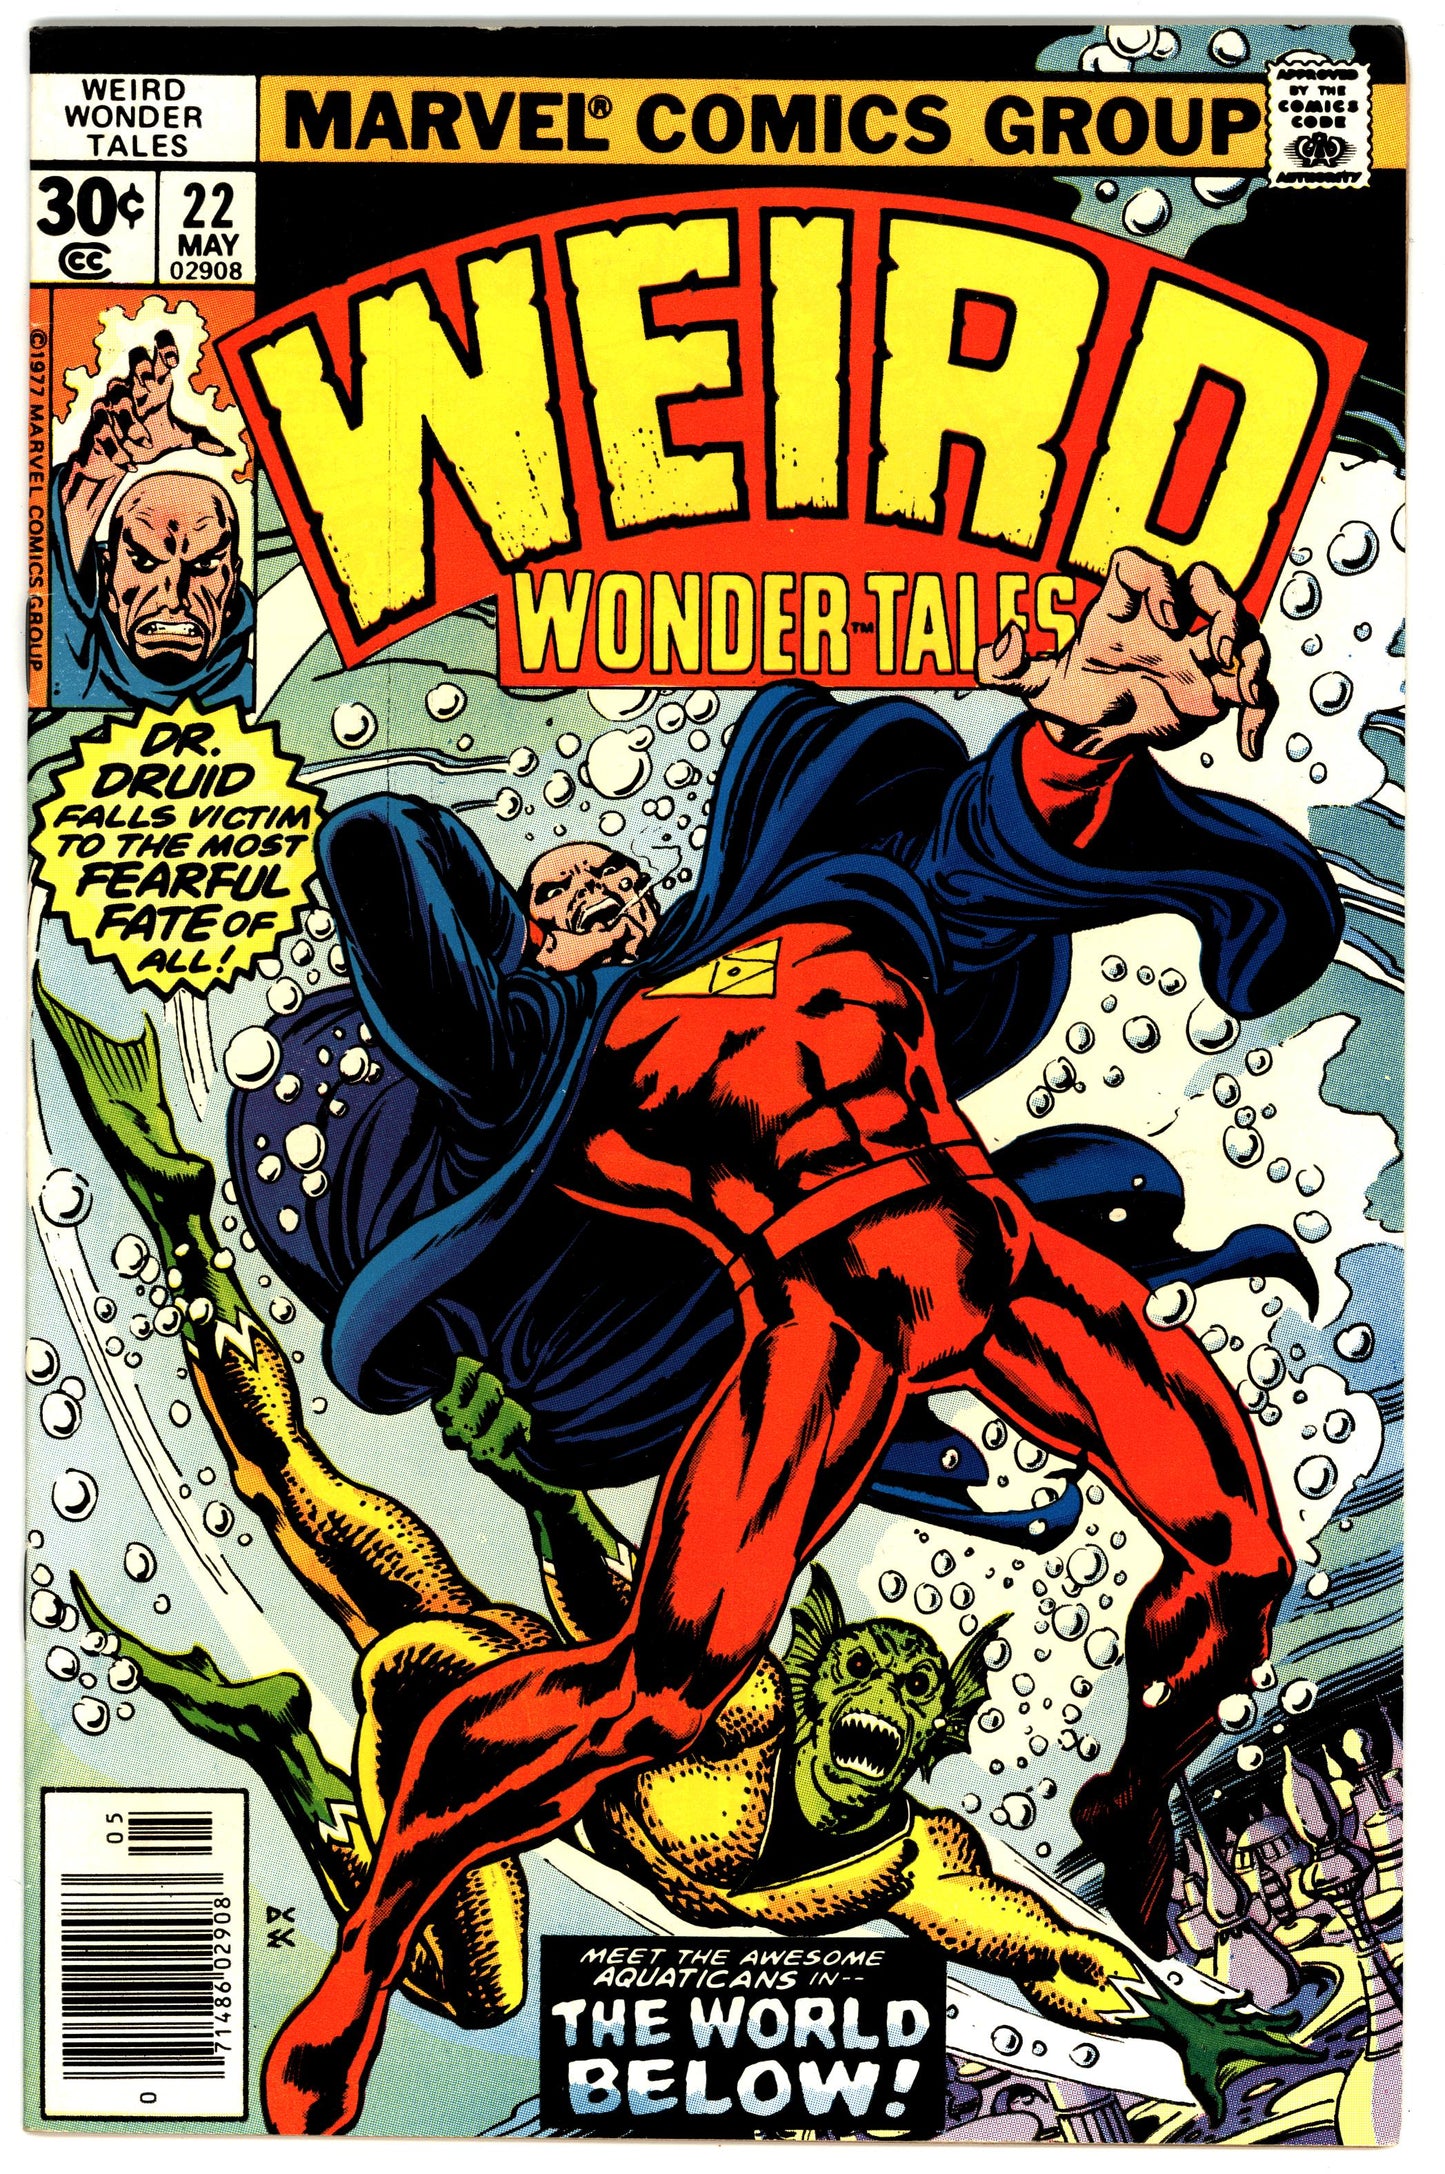 Weird Wonder Tales #22